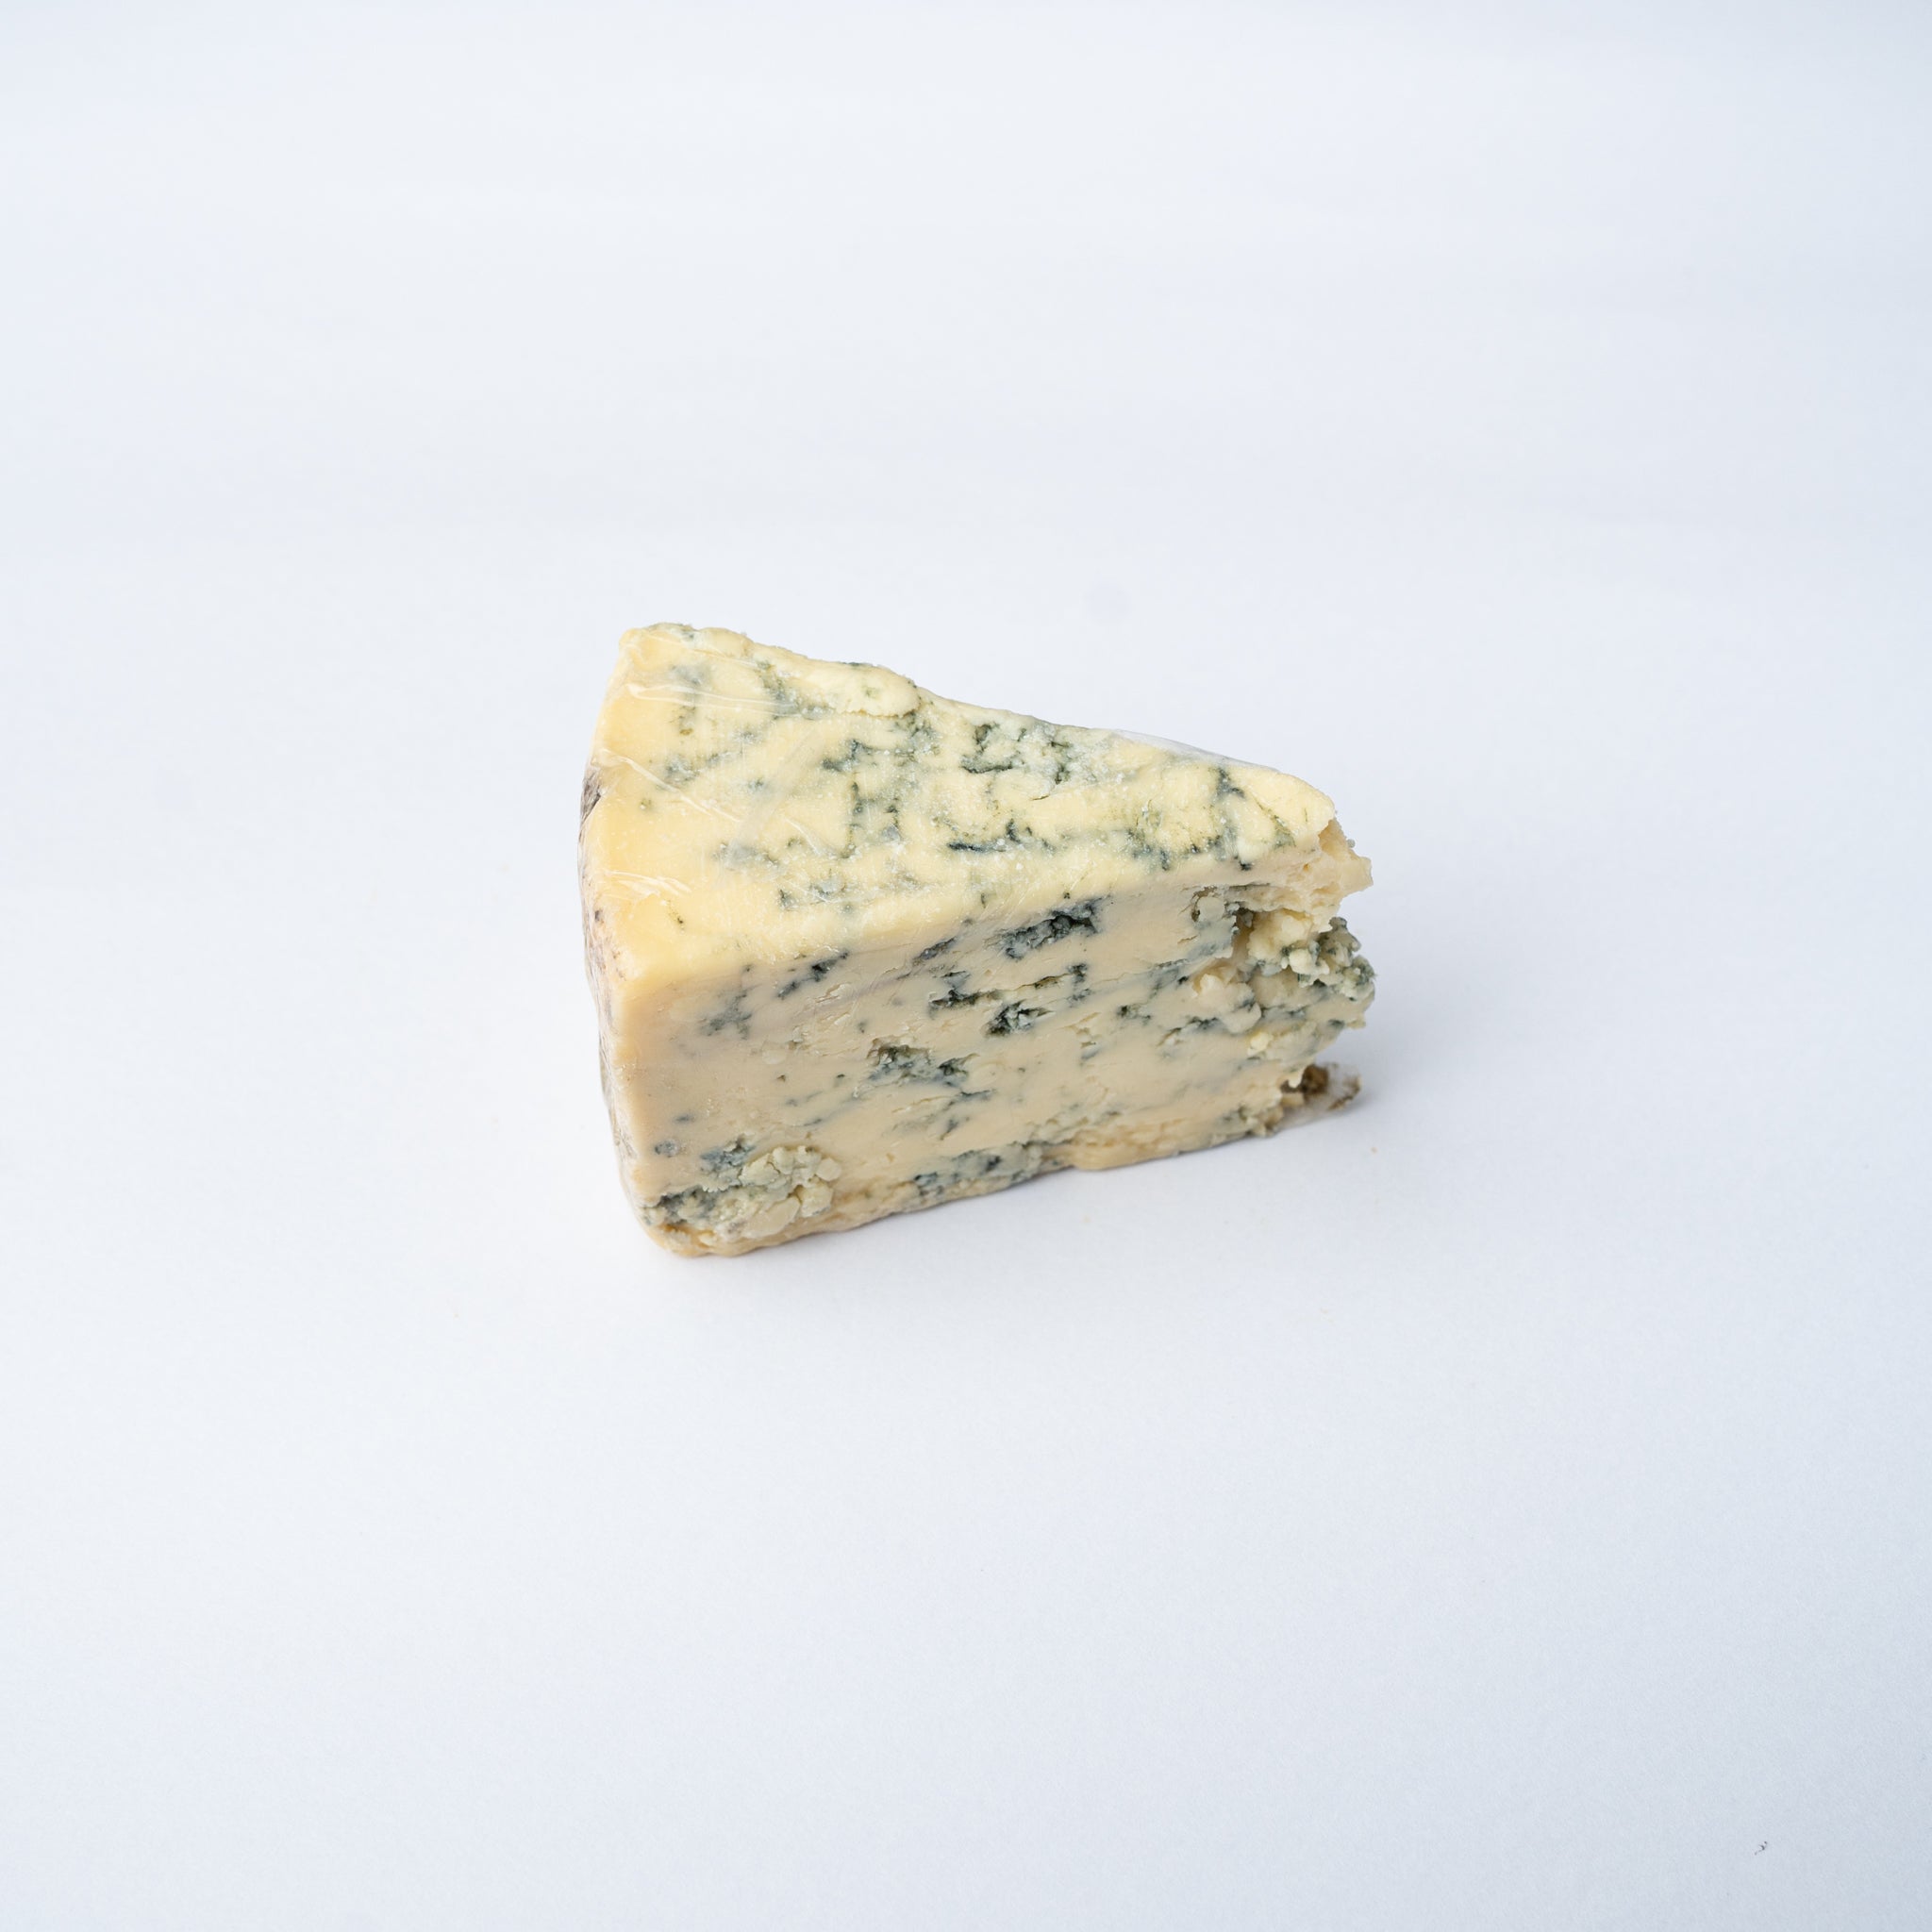 A 200g wedge of stilton cheese.